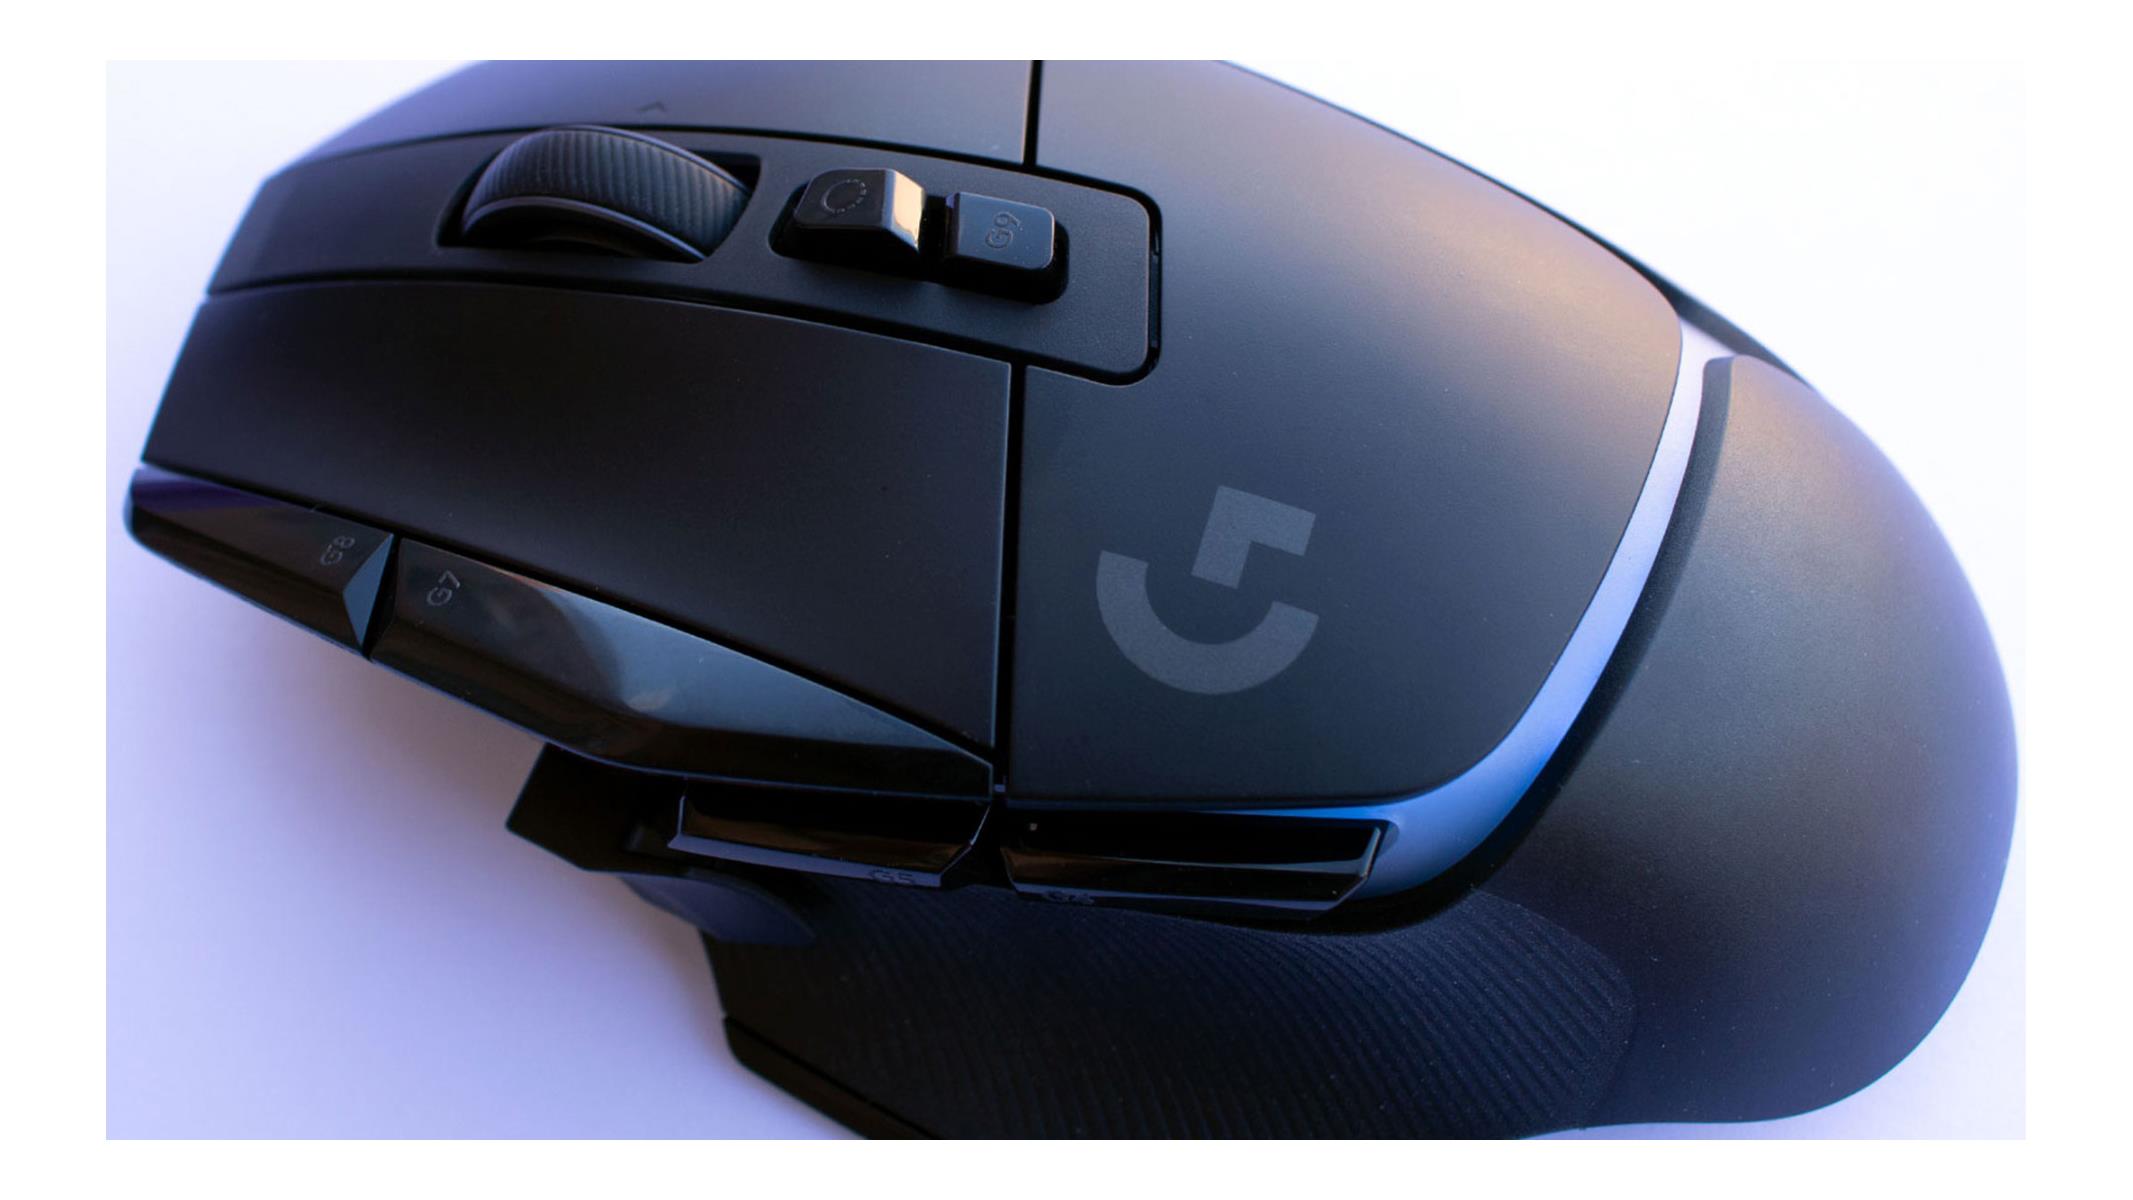 Geek Review: Logitech G502 Proteus Core Gaming Mouse